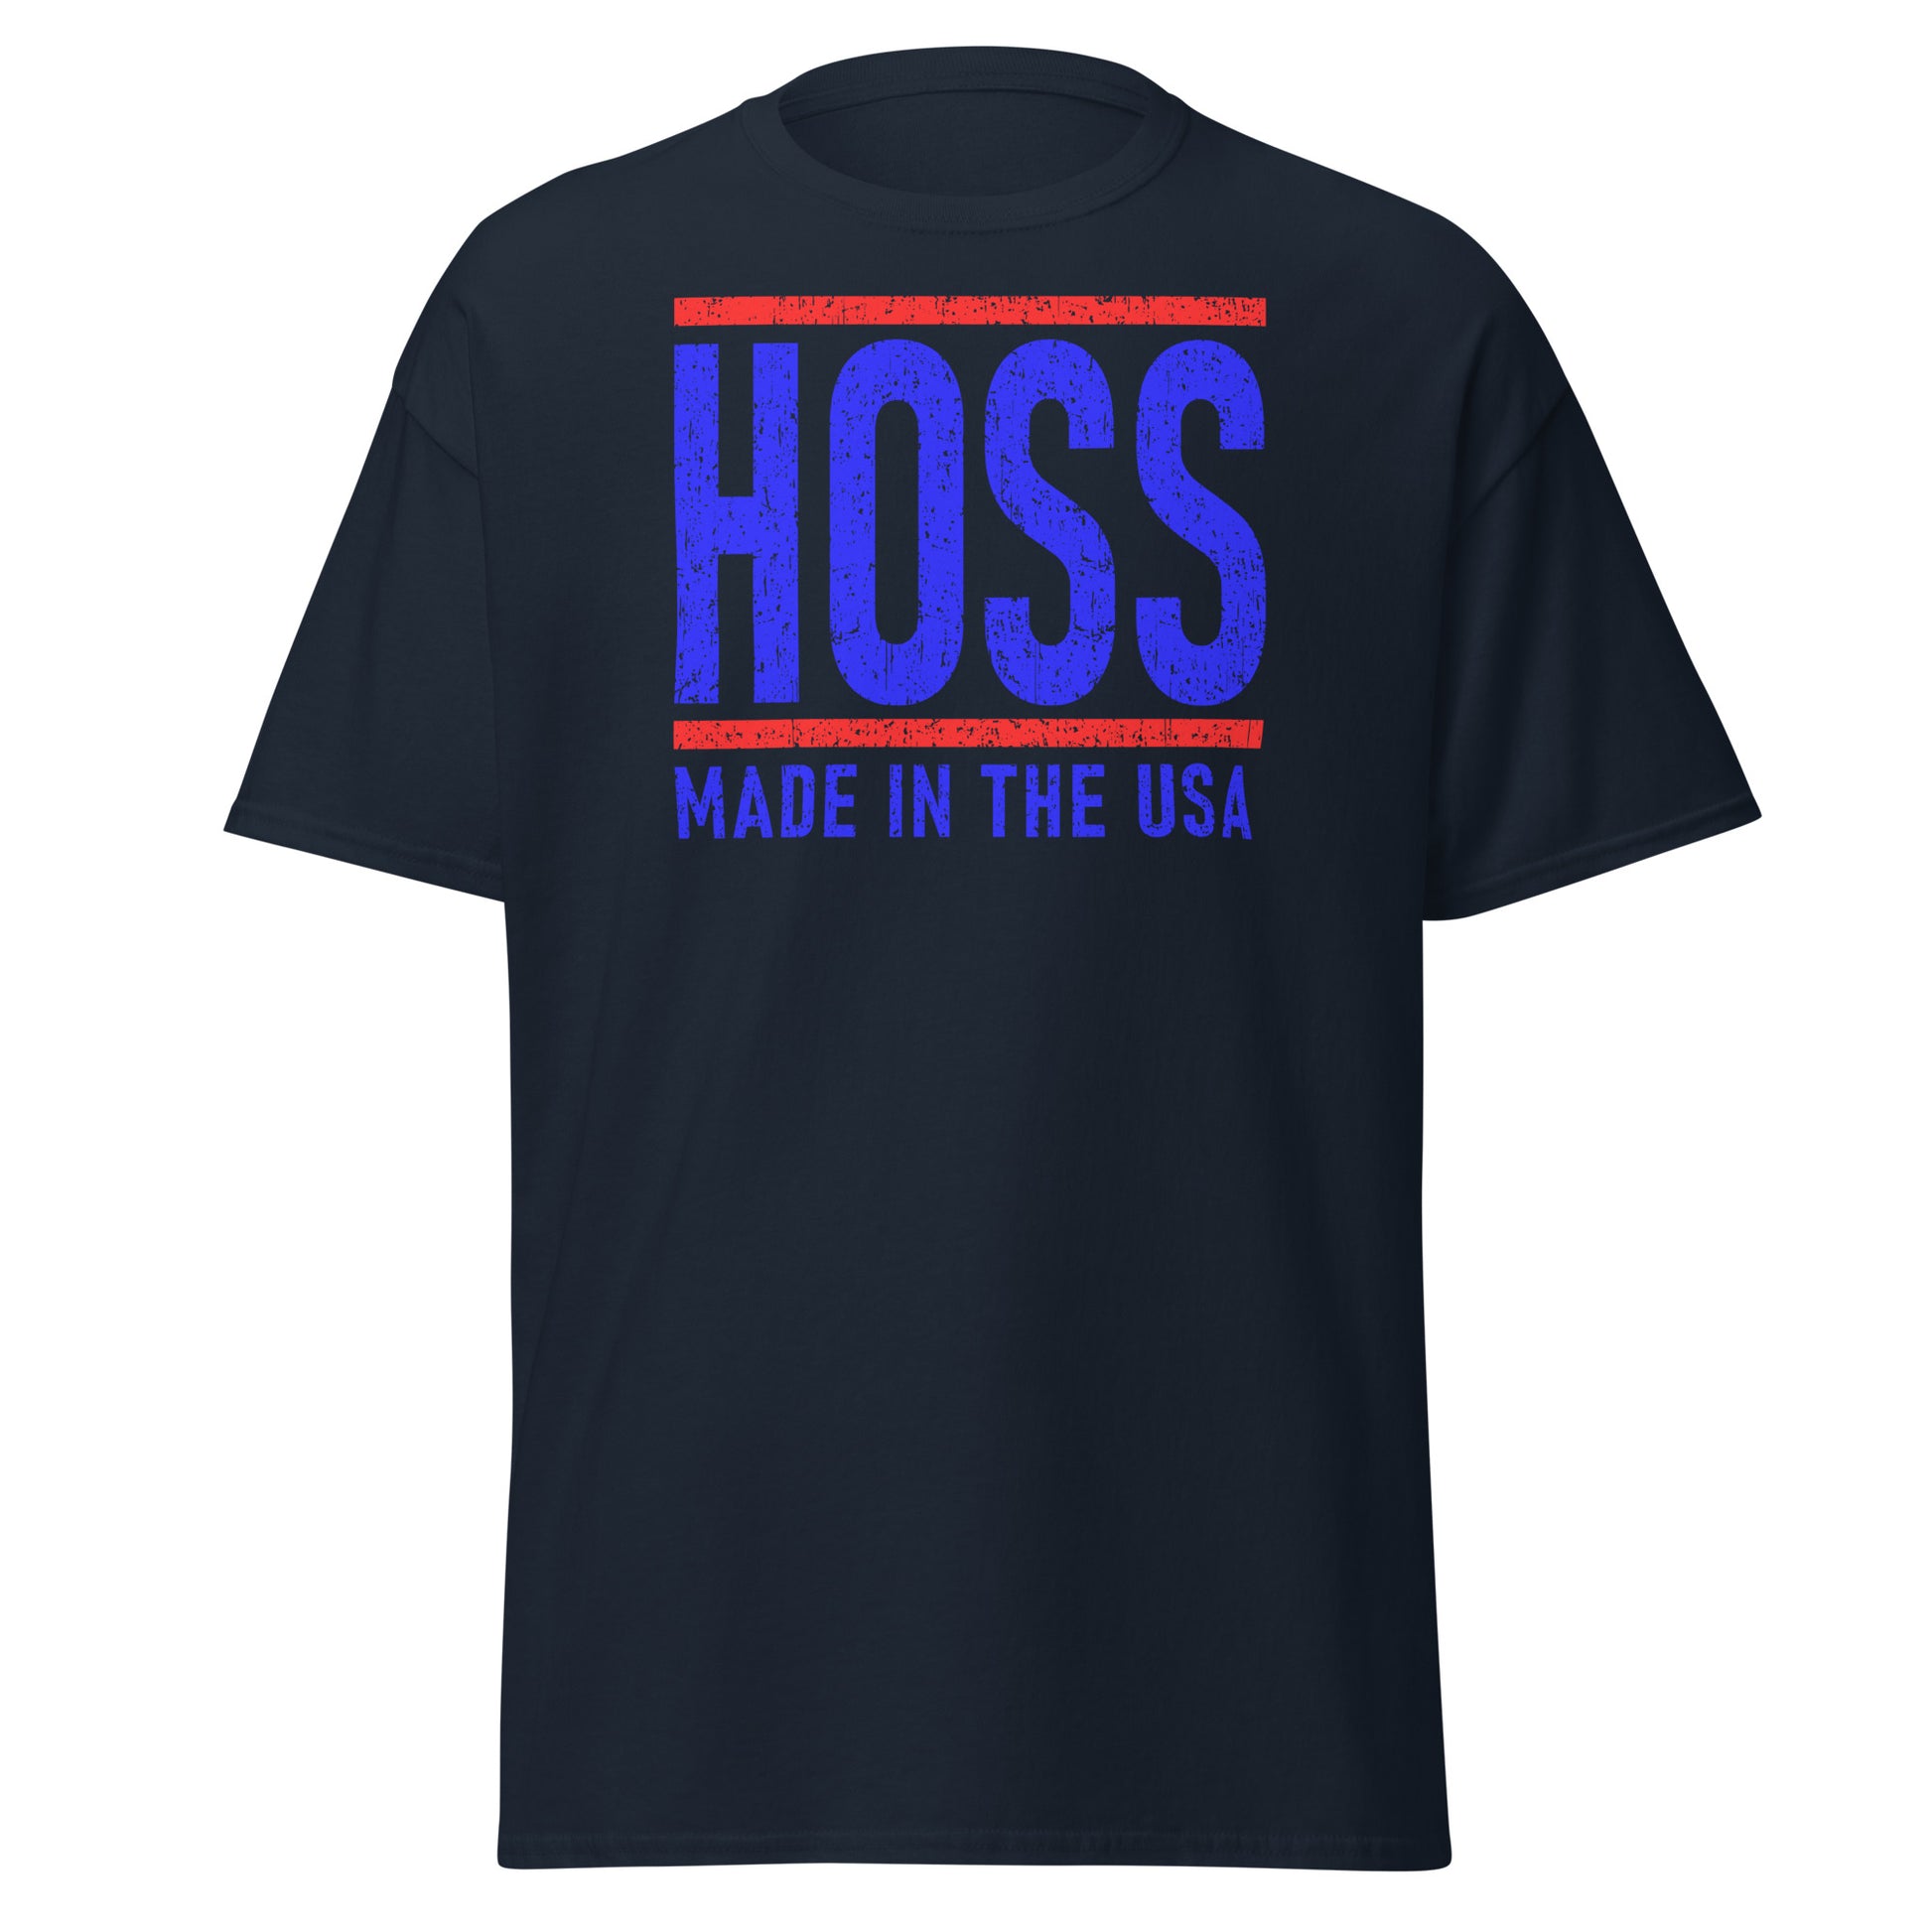 Hoss men's navy t-shirt